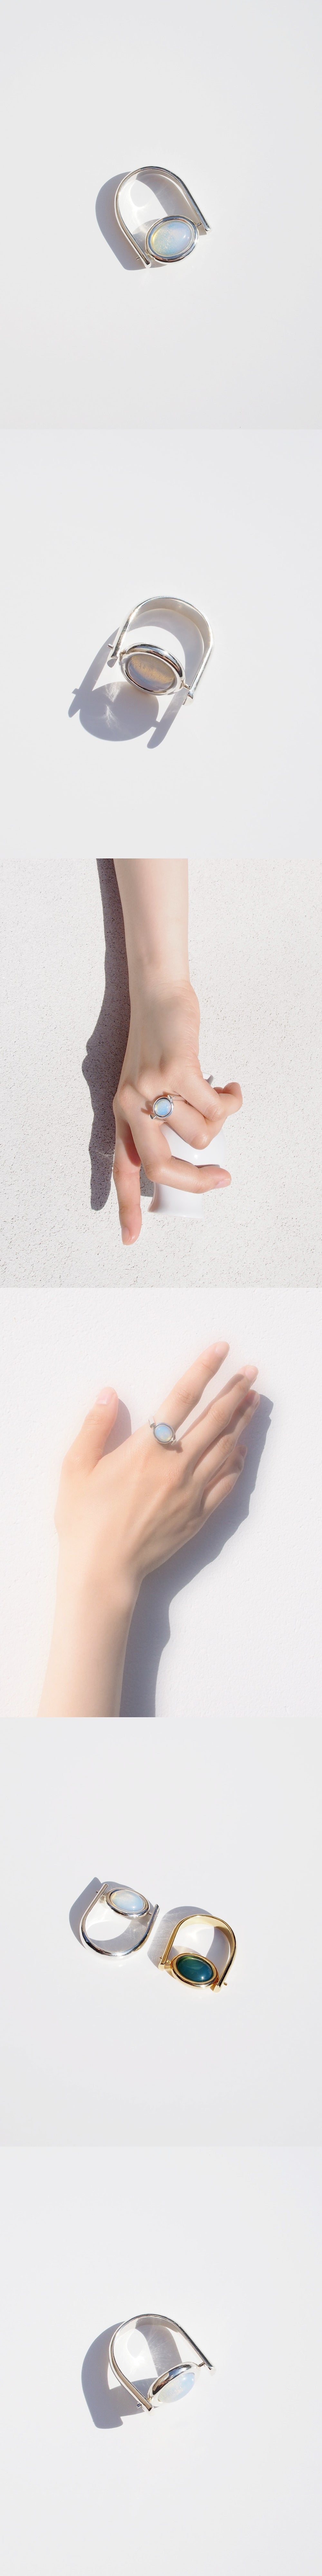 Kinetic ring _ white opal